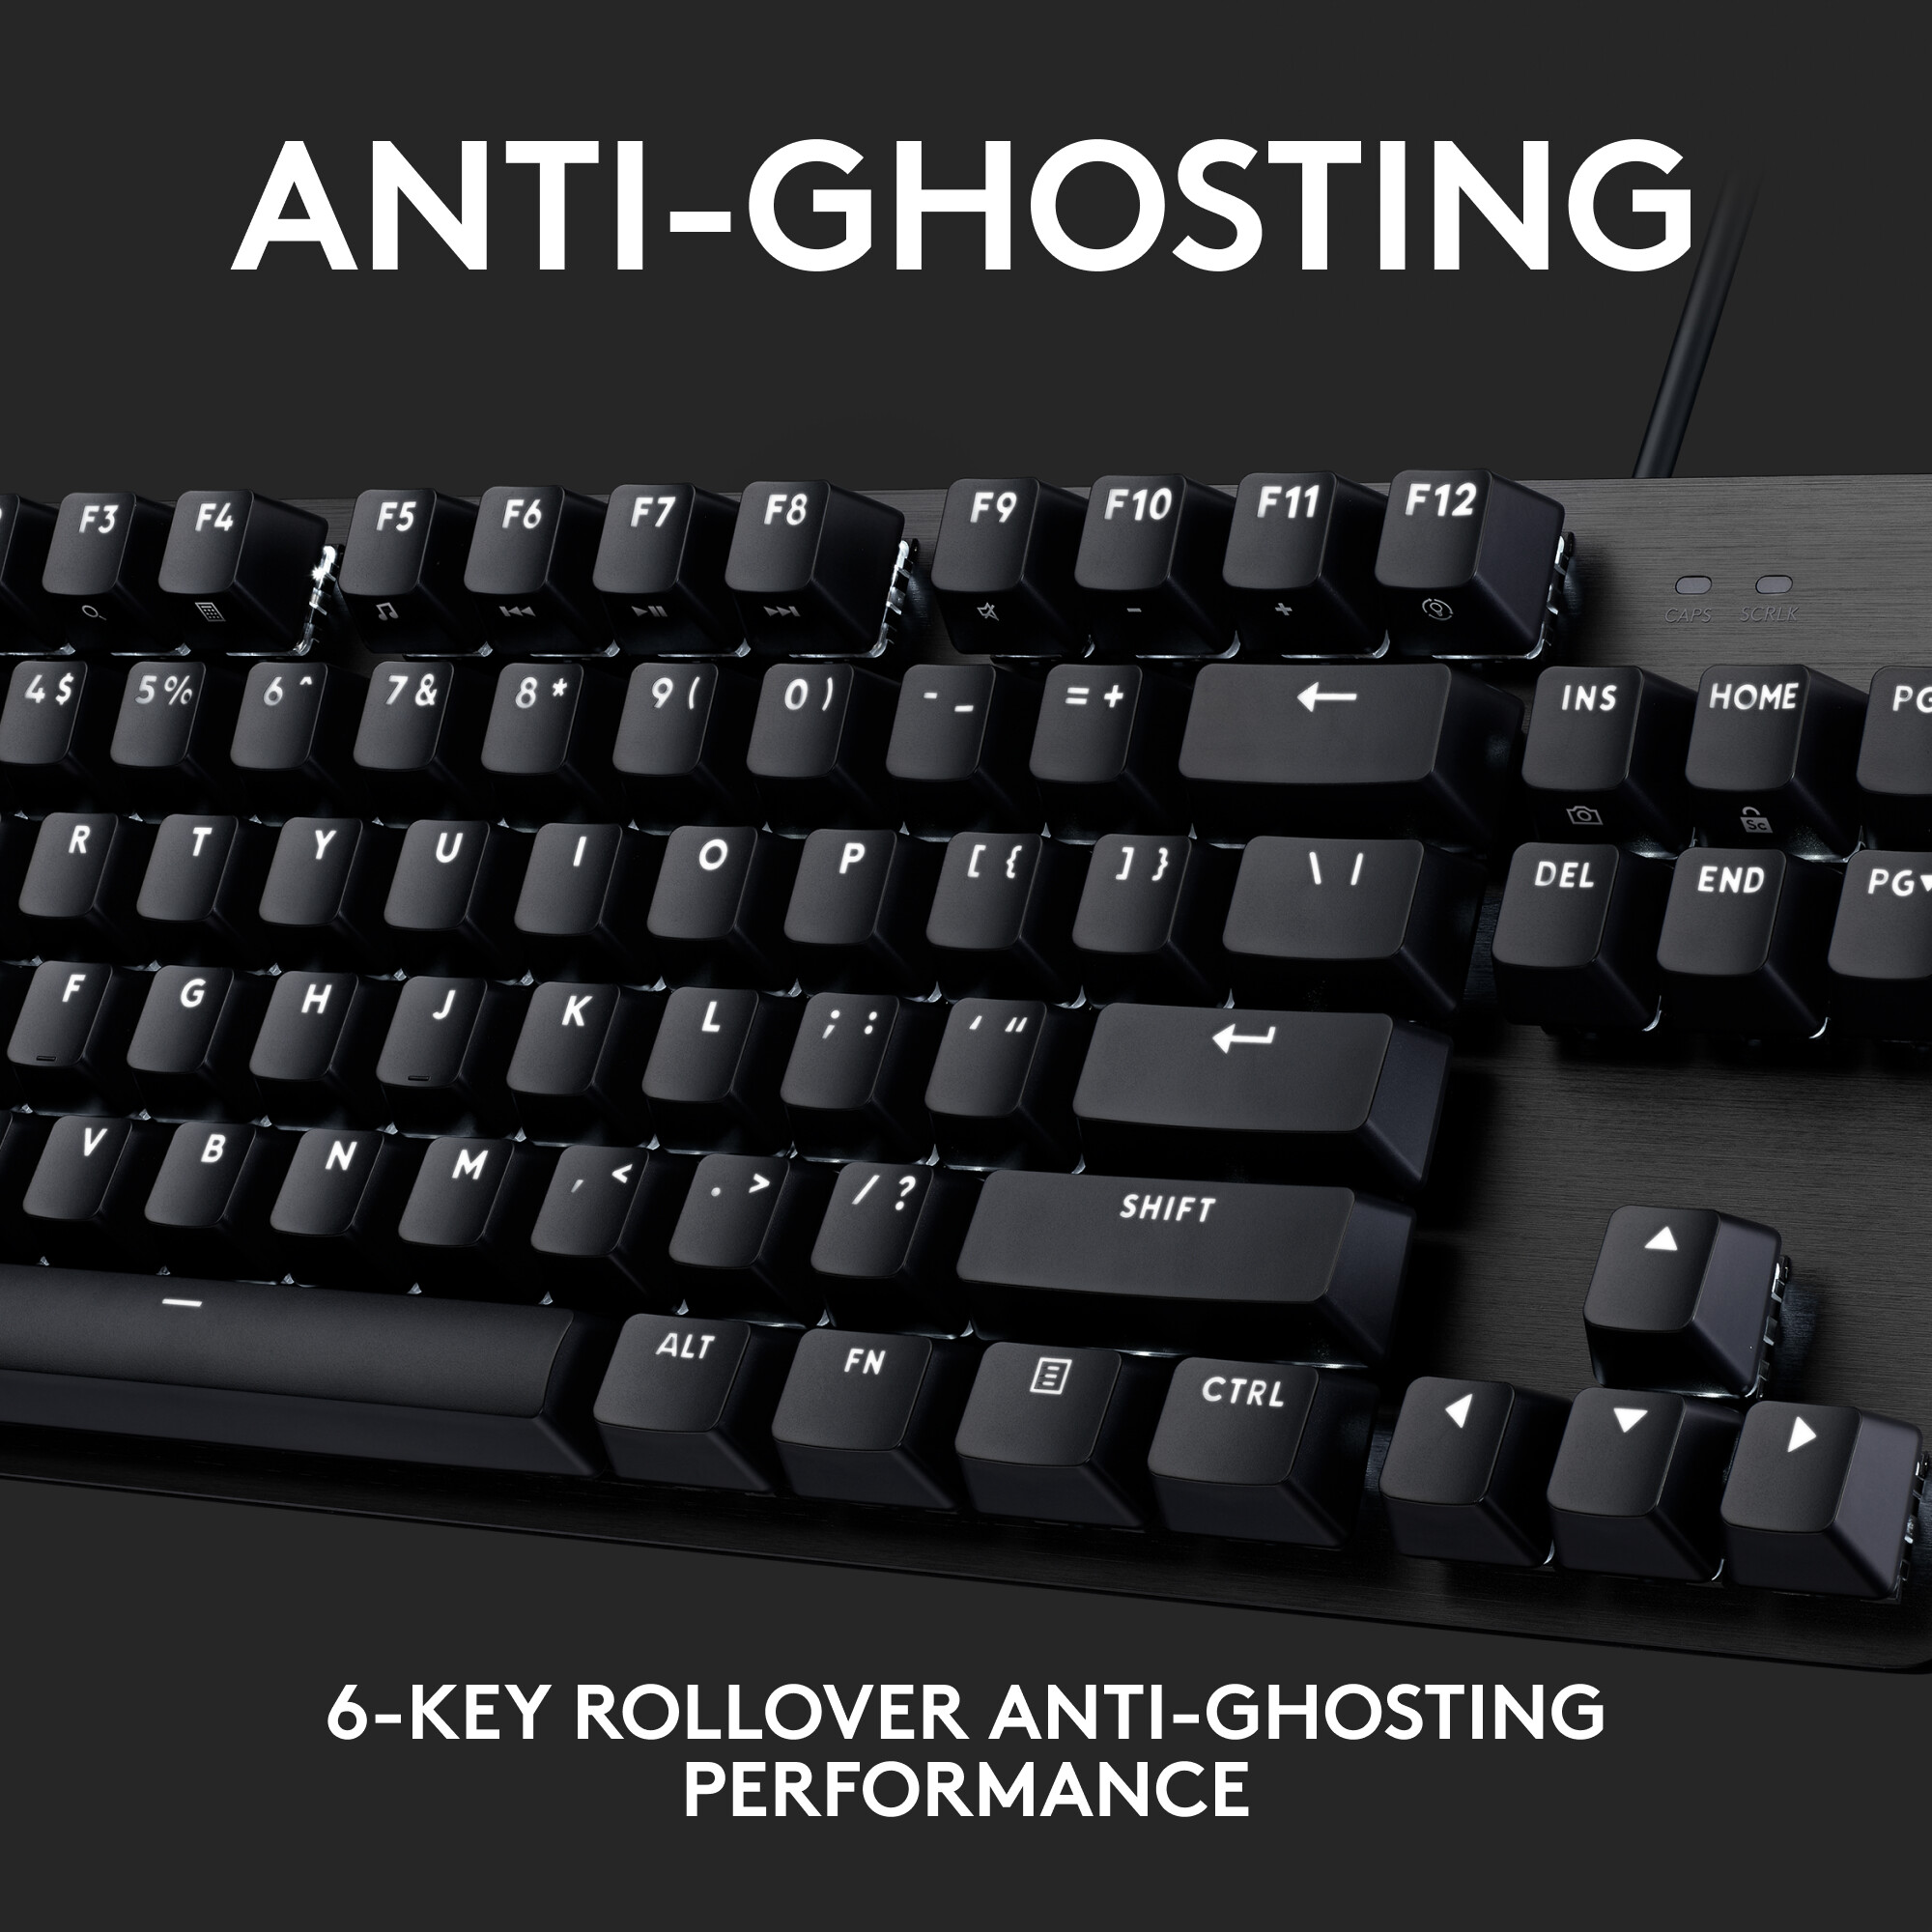 Logitech G413 TKL SE Mechanical Gaming Keyboard - Compact Backlit